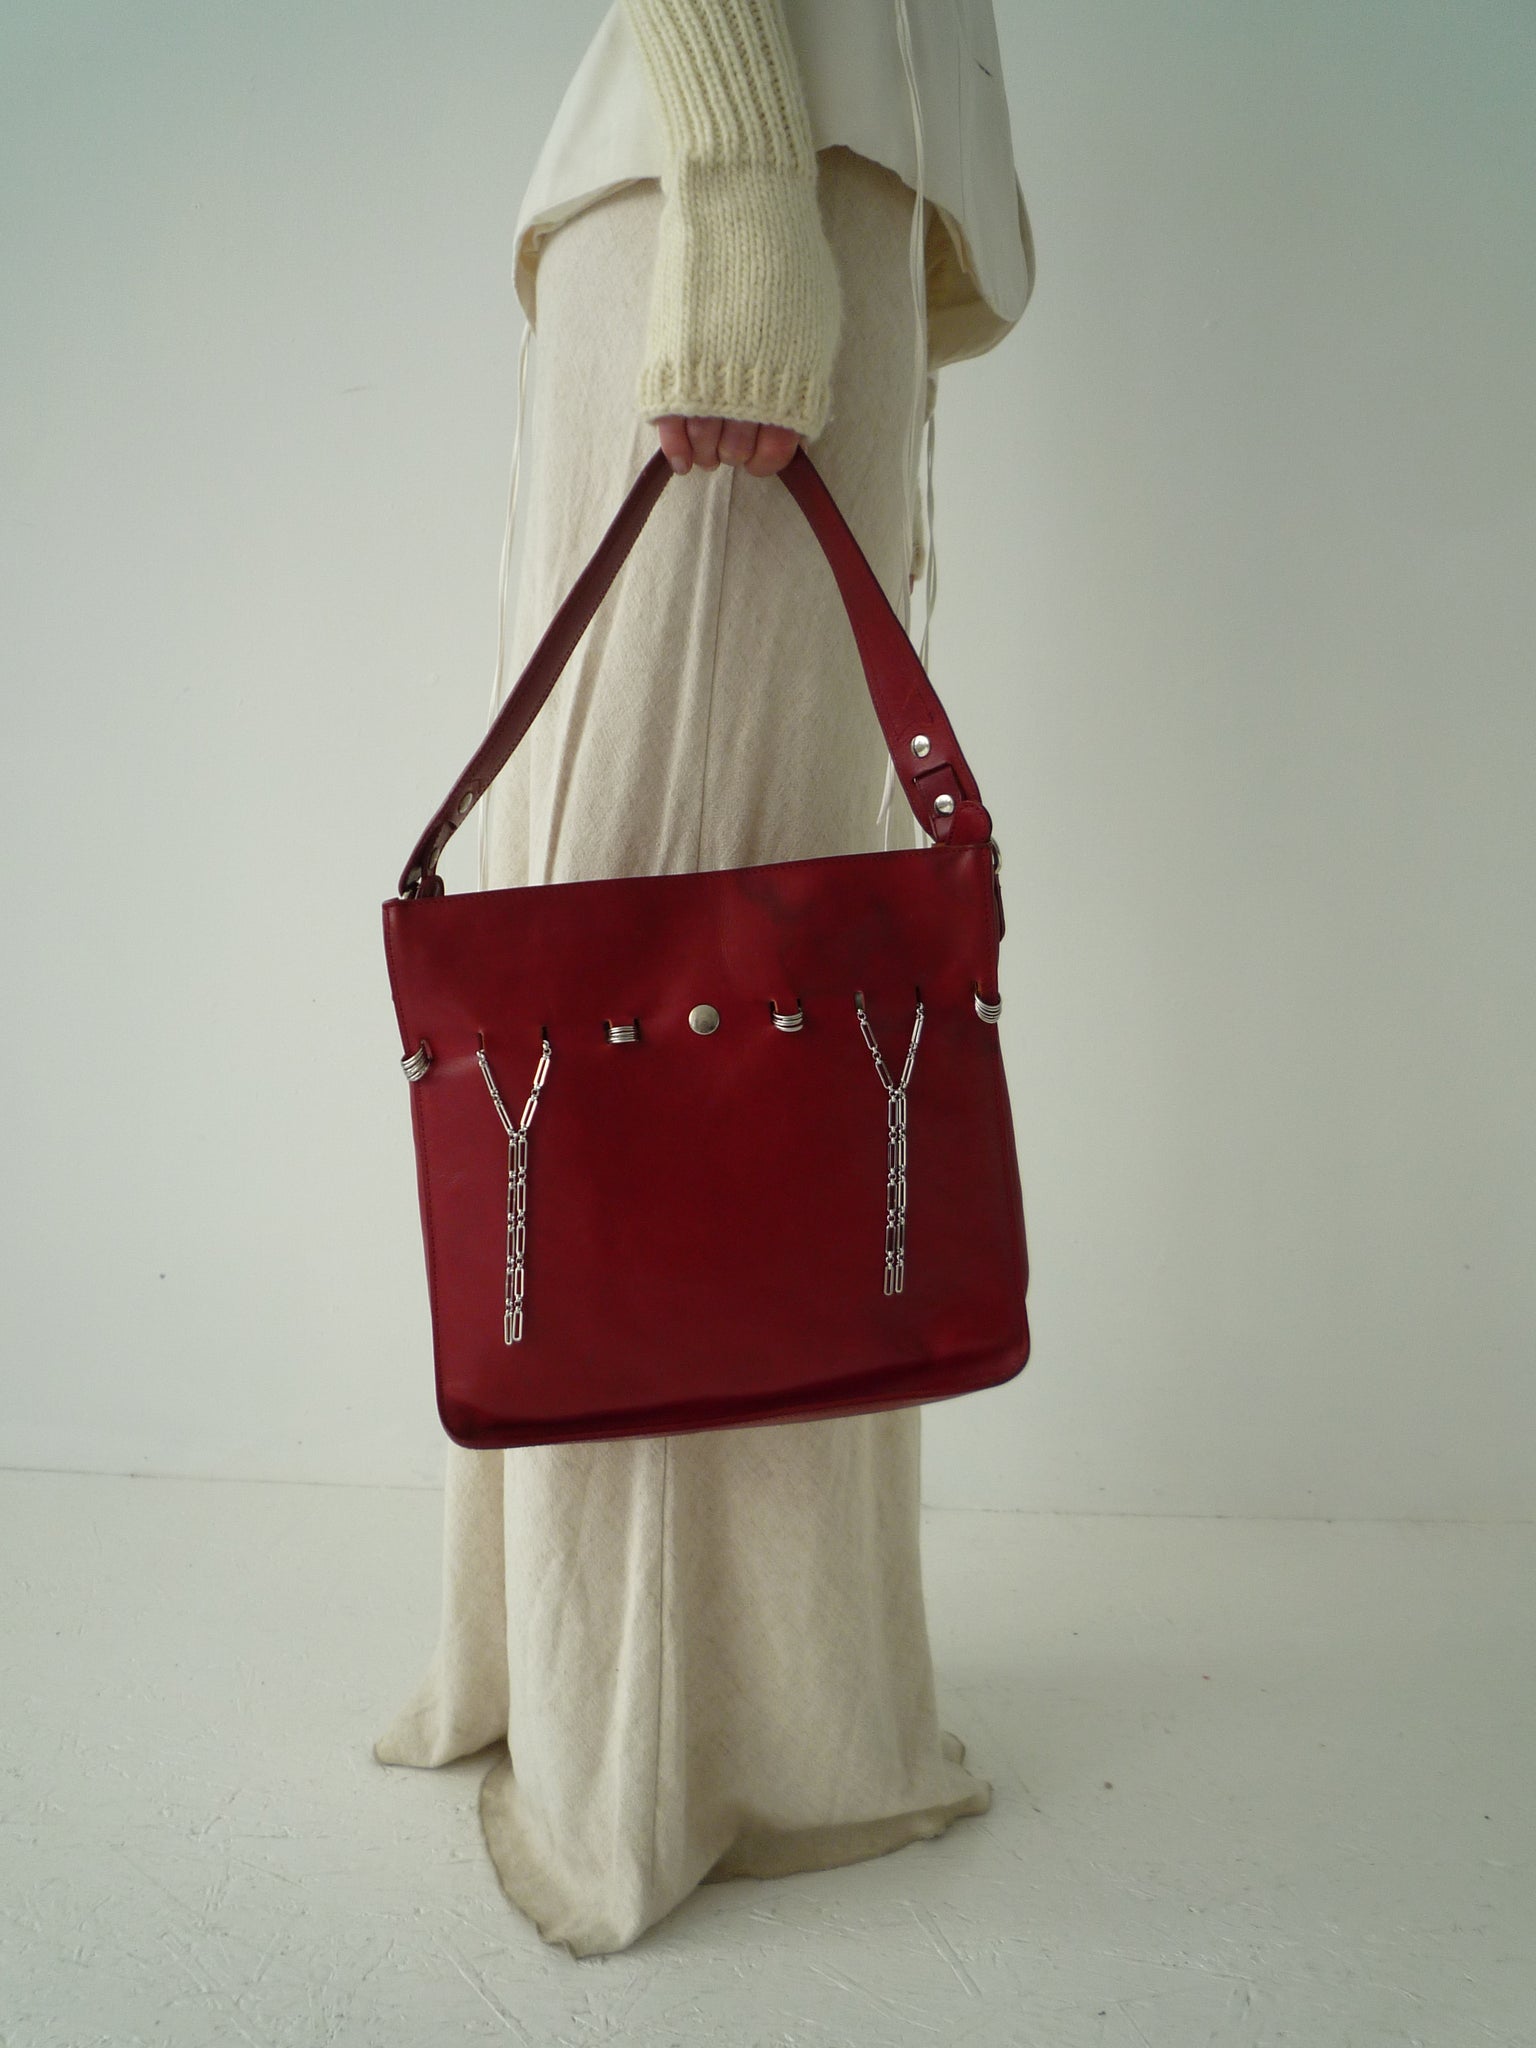 Piercing Bag Red